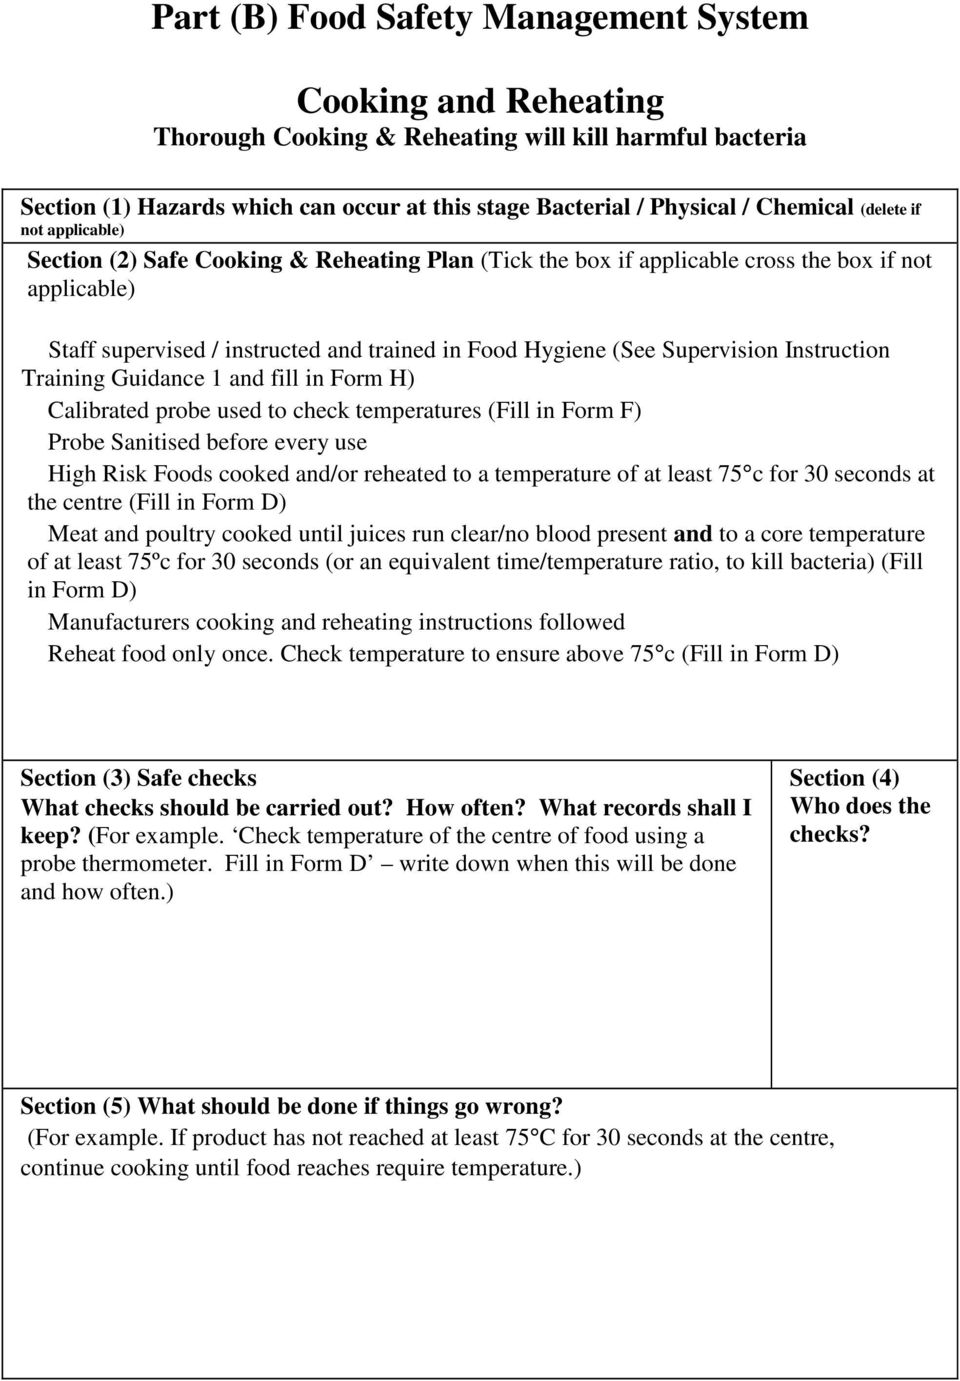 Food Safety Management System For - PDF Free Download